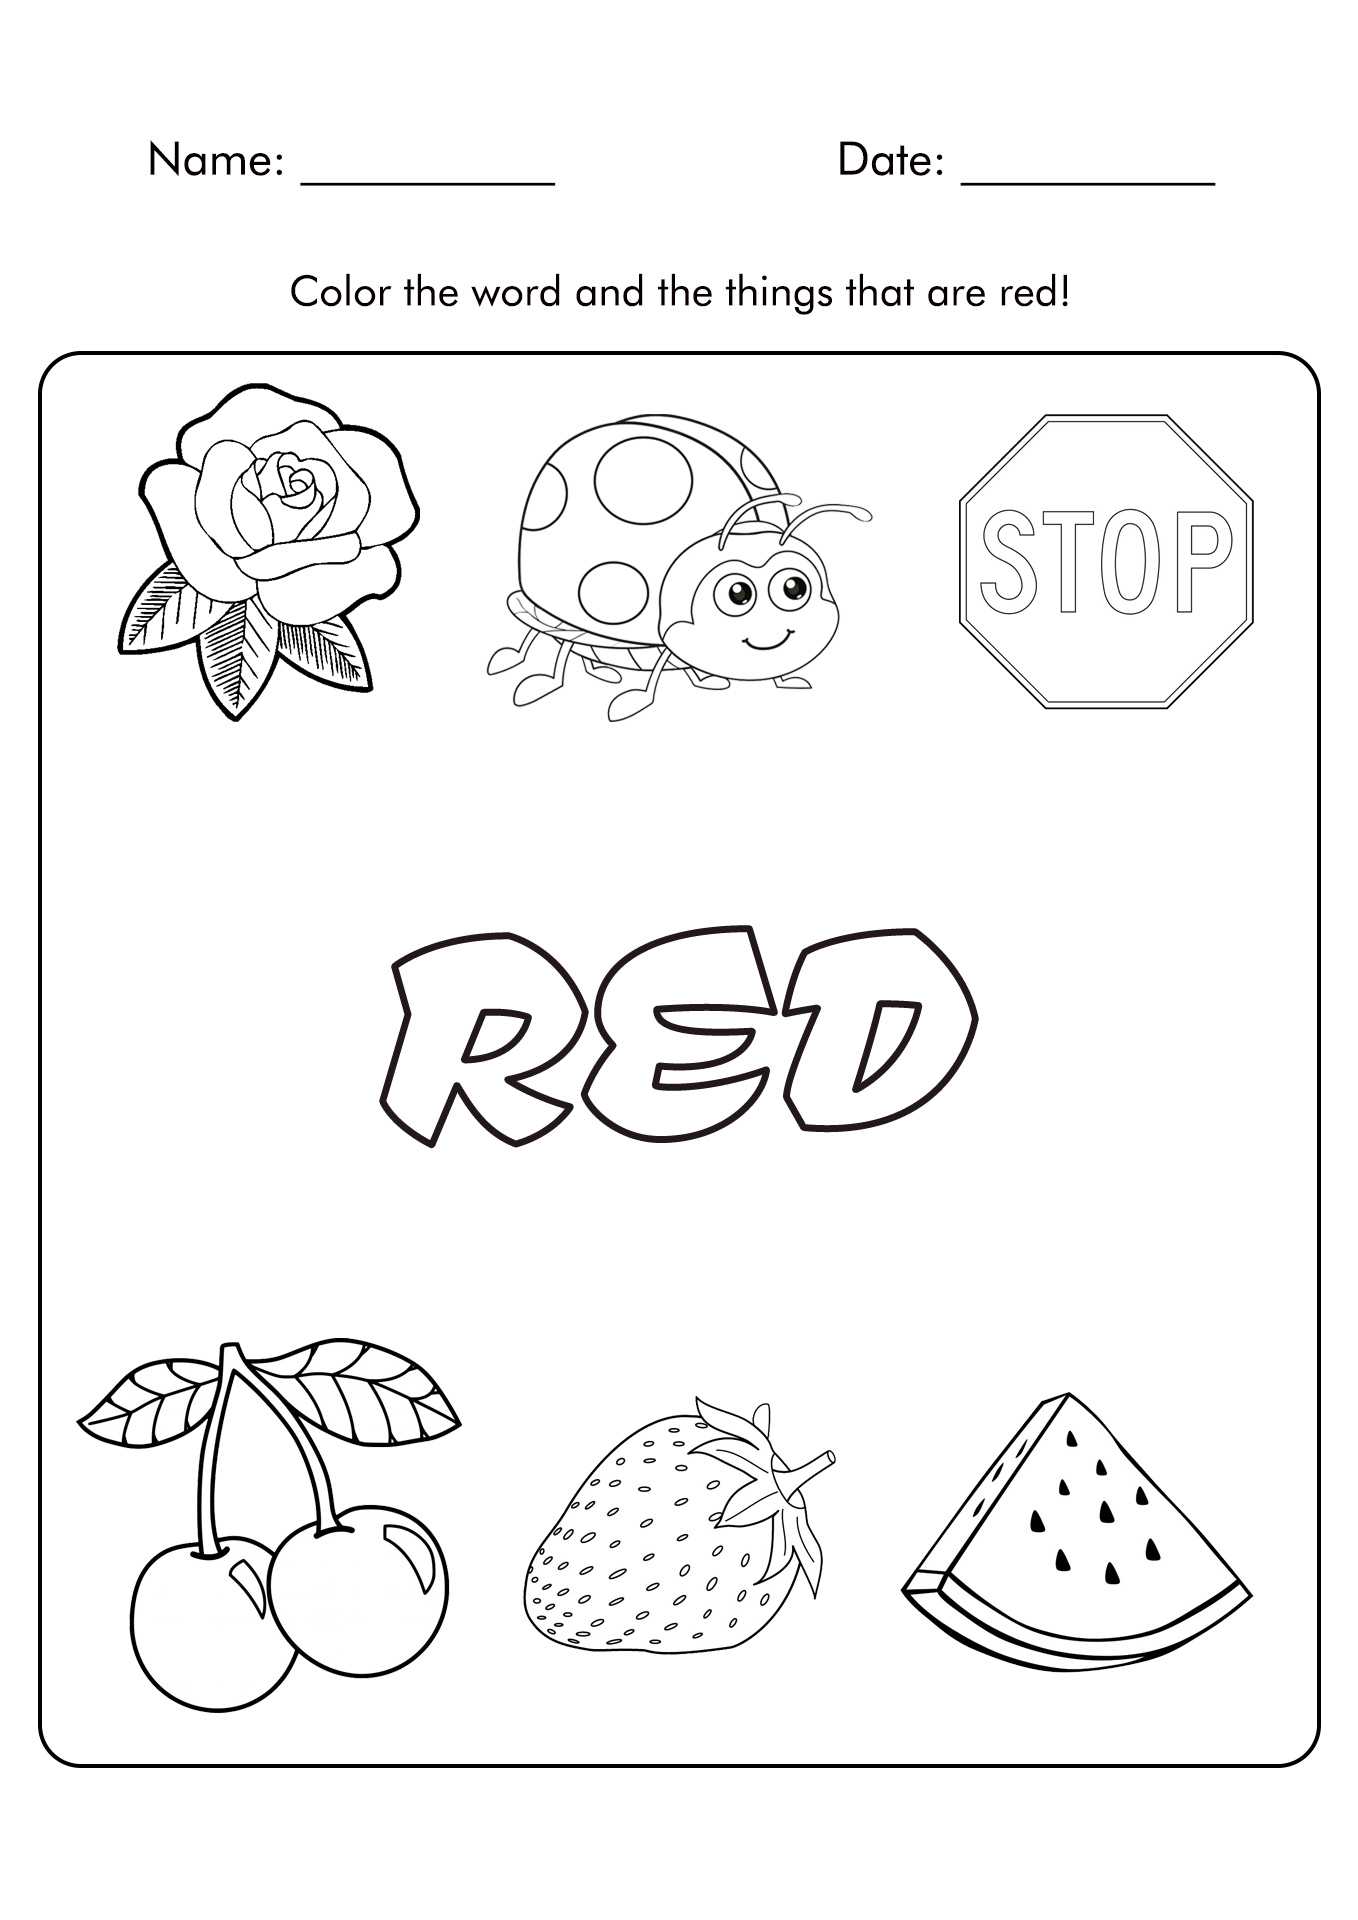 10 Best Images of Red Color Worksheets Printable - Color Red Worksheets